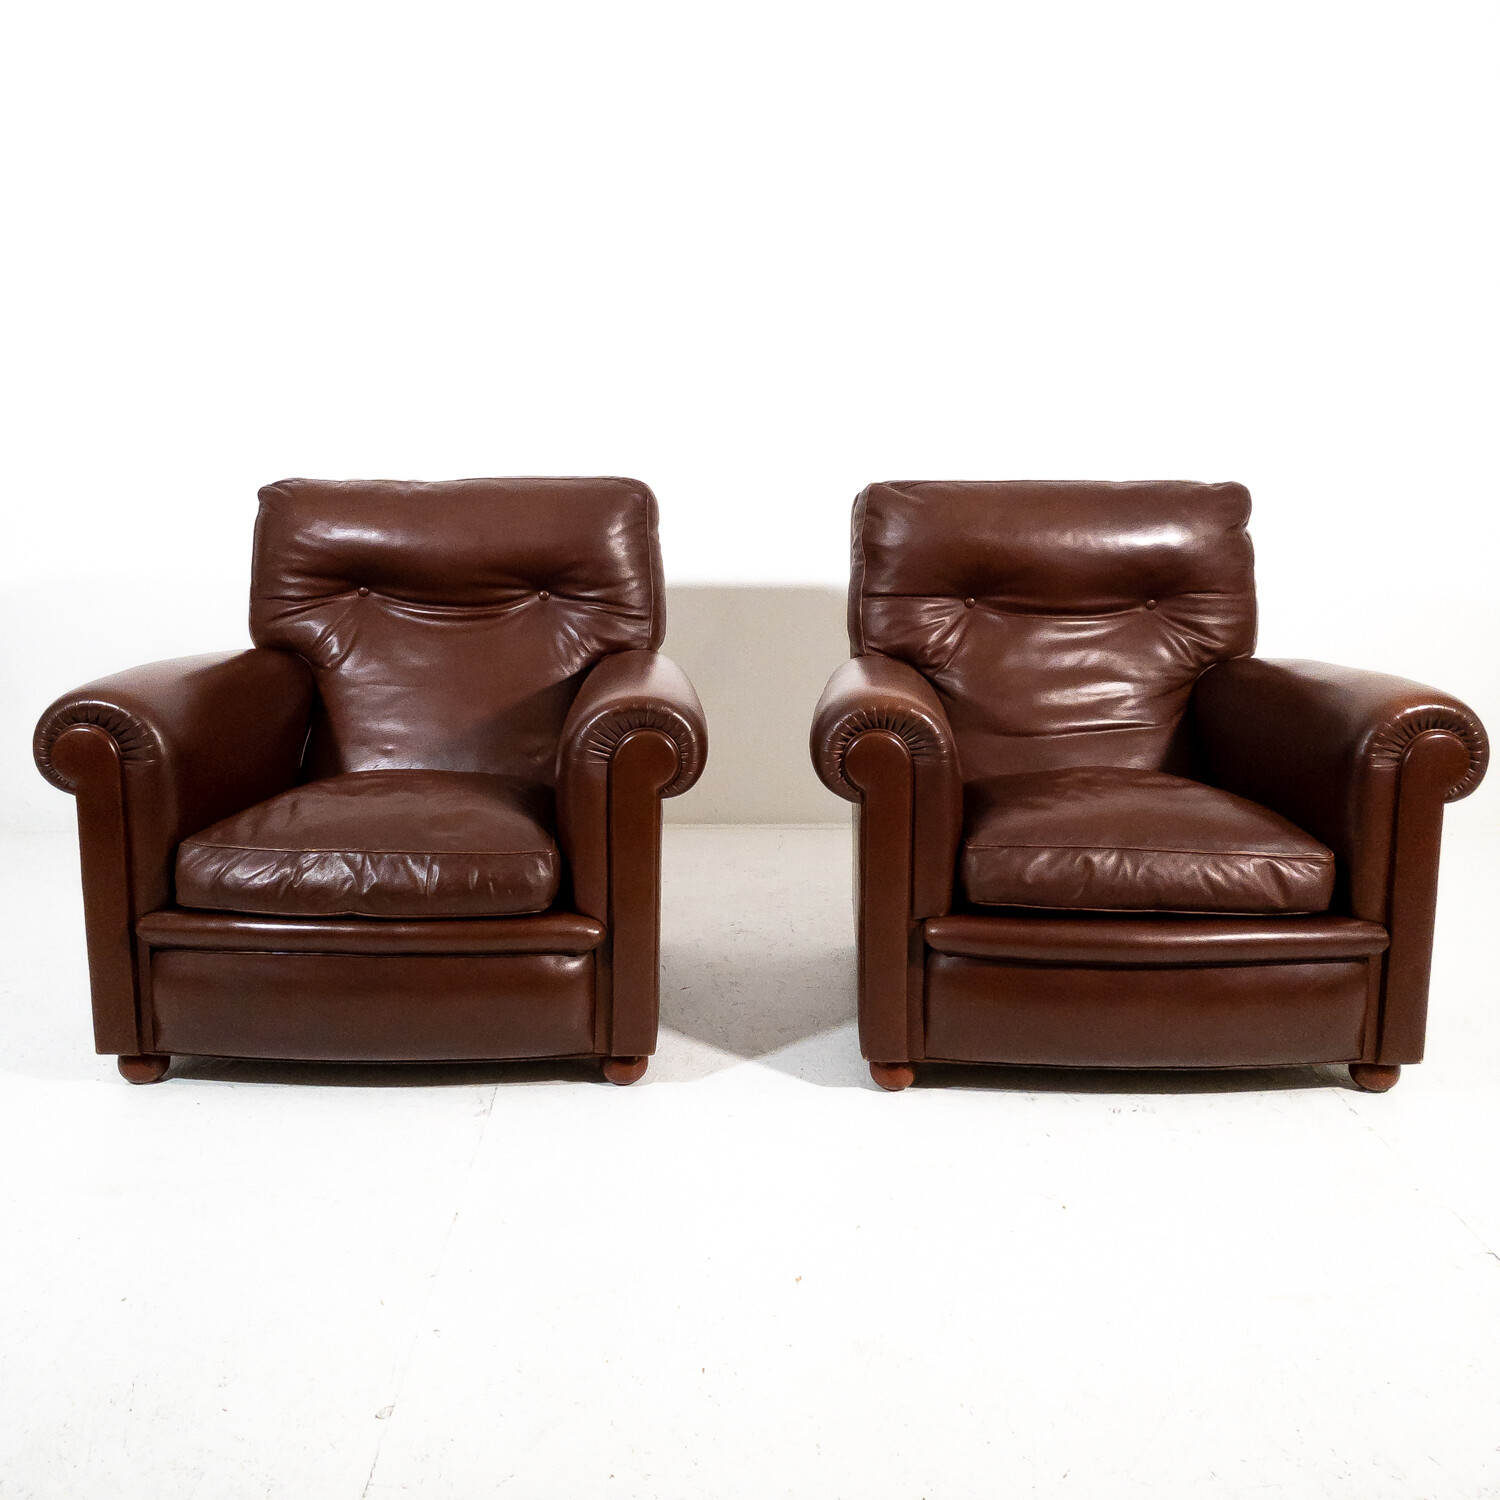 Pair of Edoardo armchairs by Poltrona Frau, Italy, 1960s